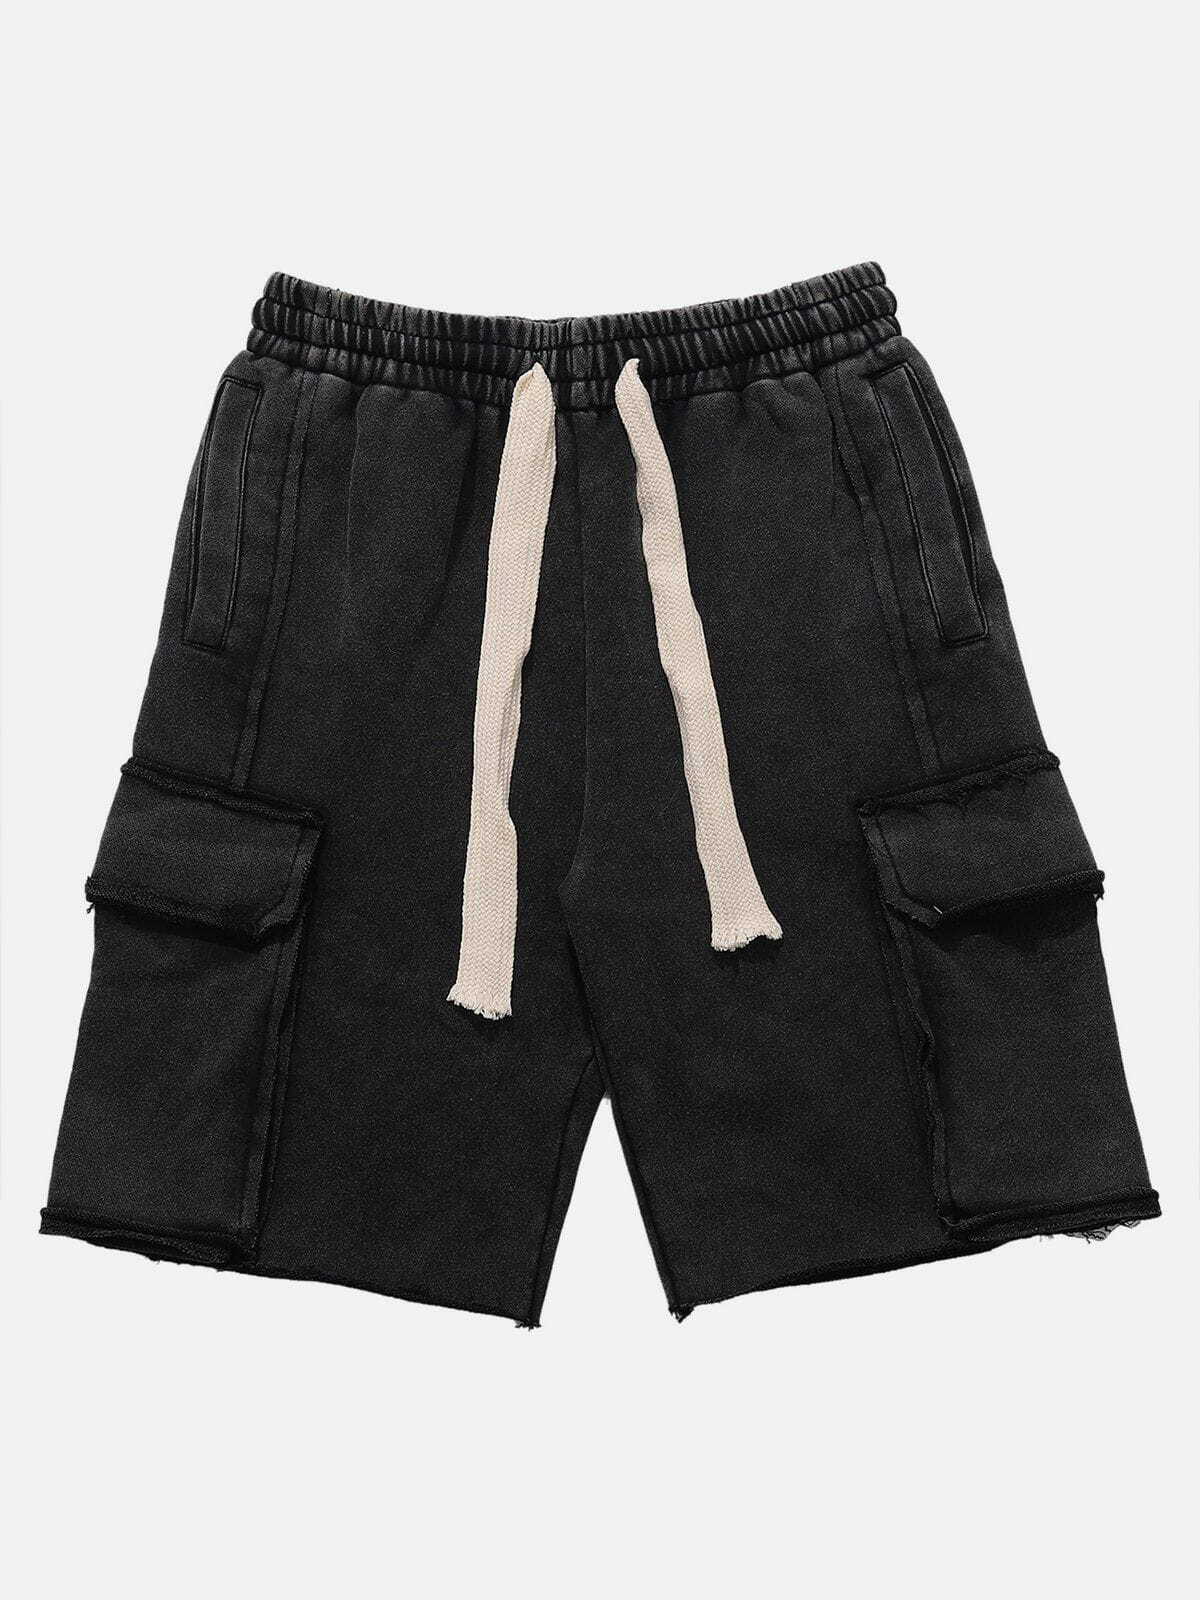 vintage denim shorts urban chic streetwear 8881